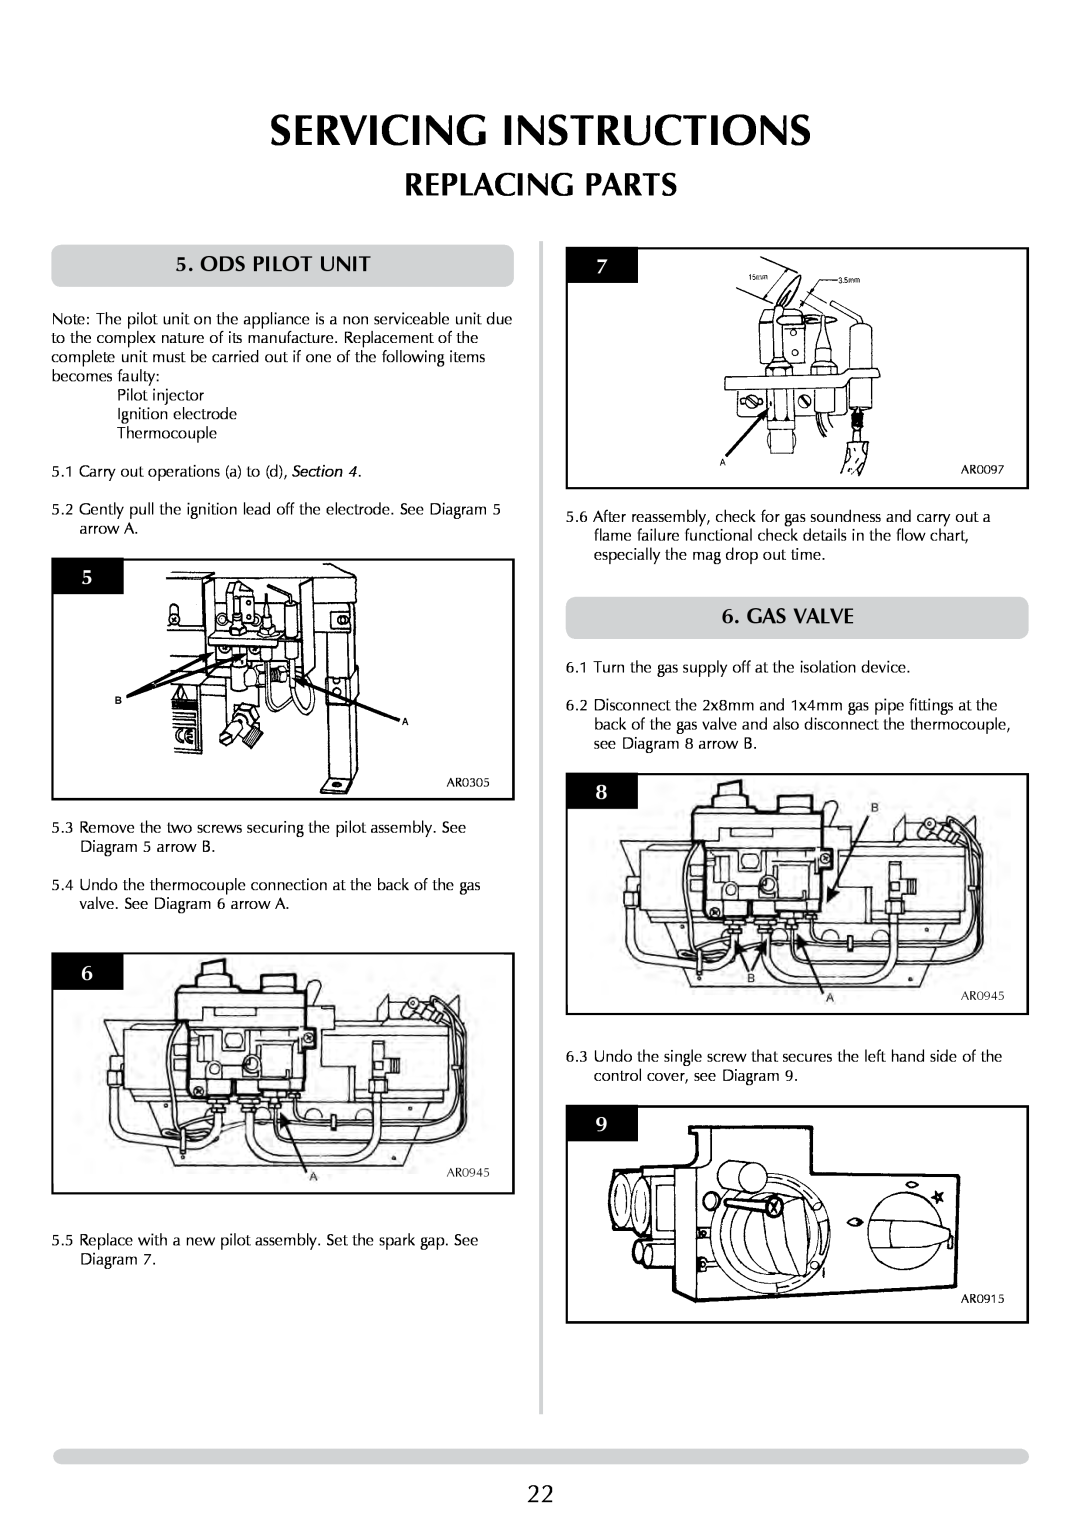 Stovax 8455 manual Servicing Instructions, Replacing Parts, Ods Pilot Unit, Gas Valve 